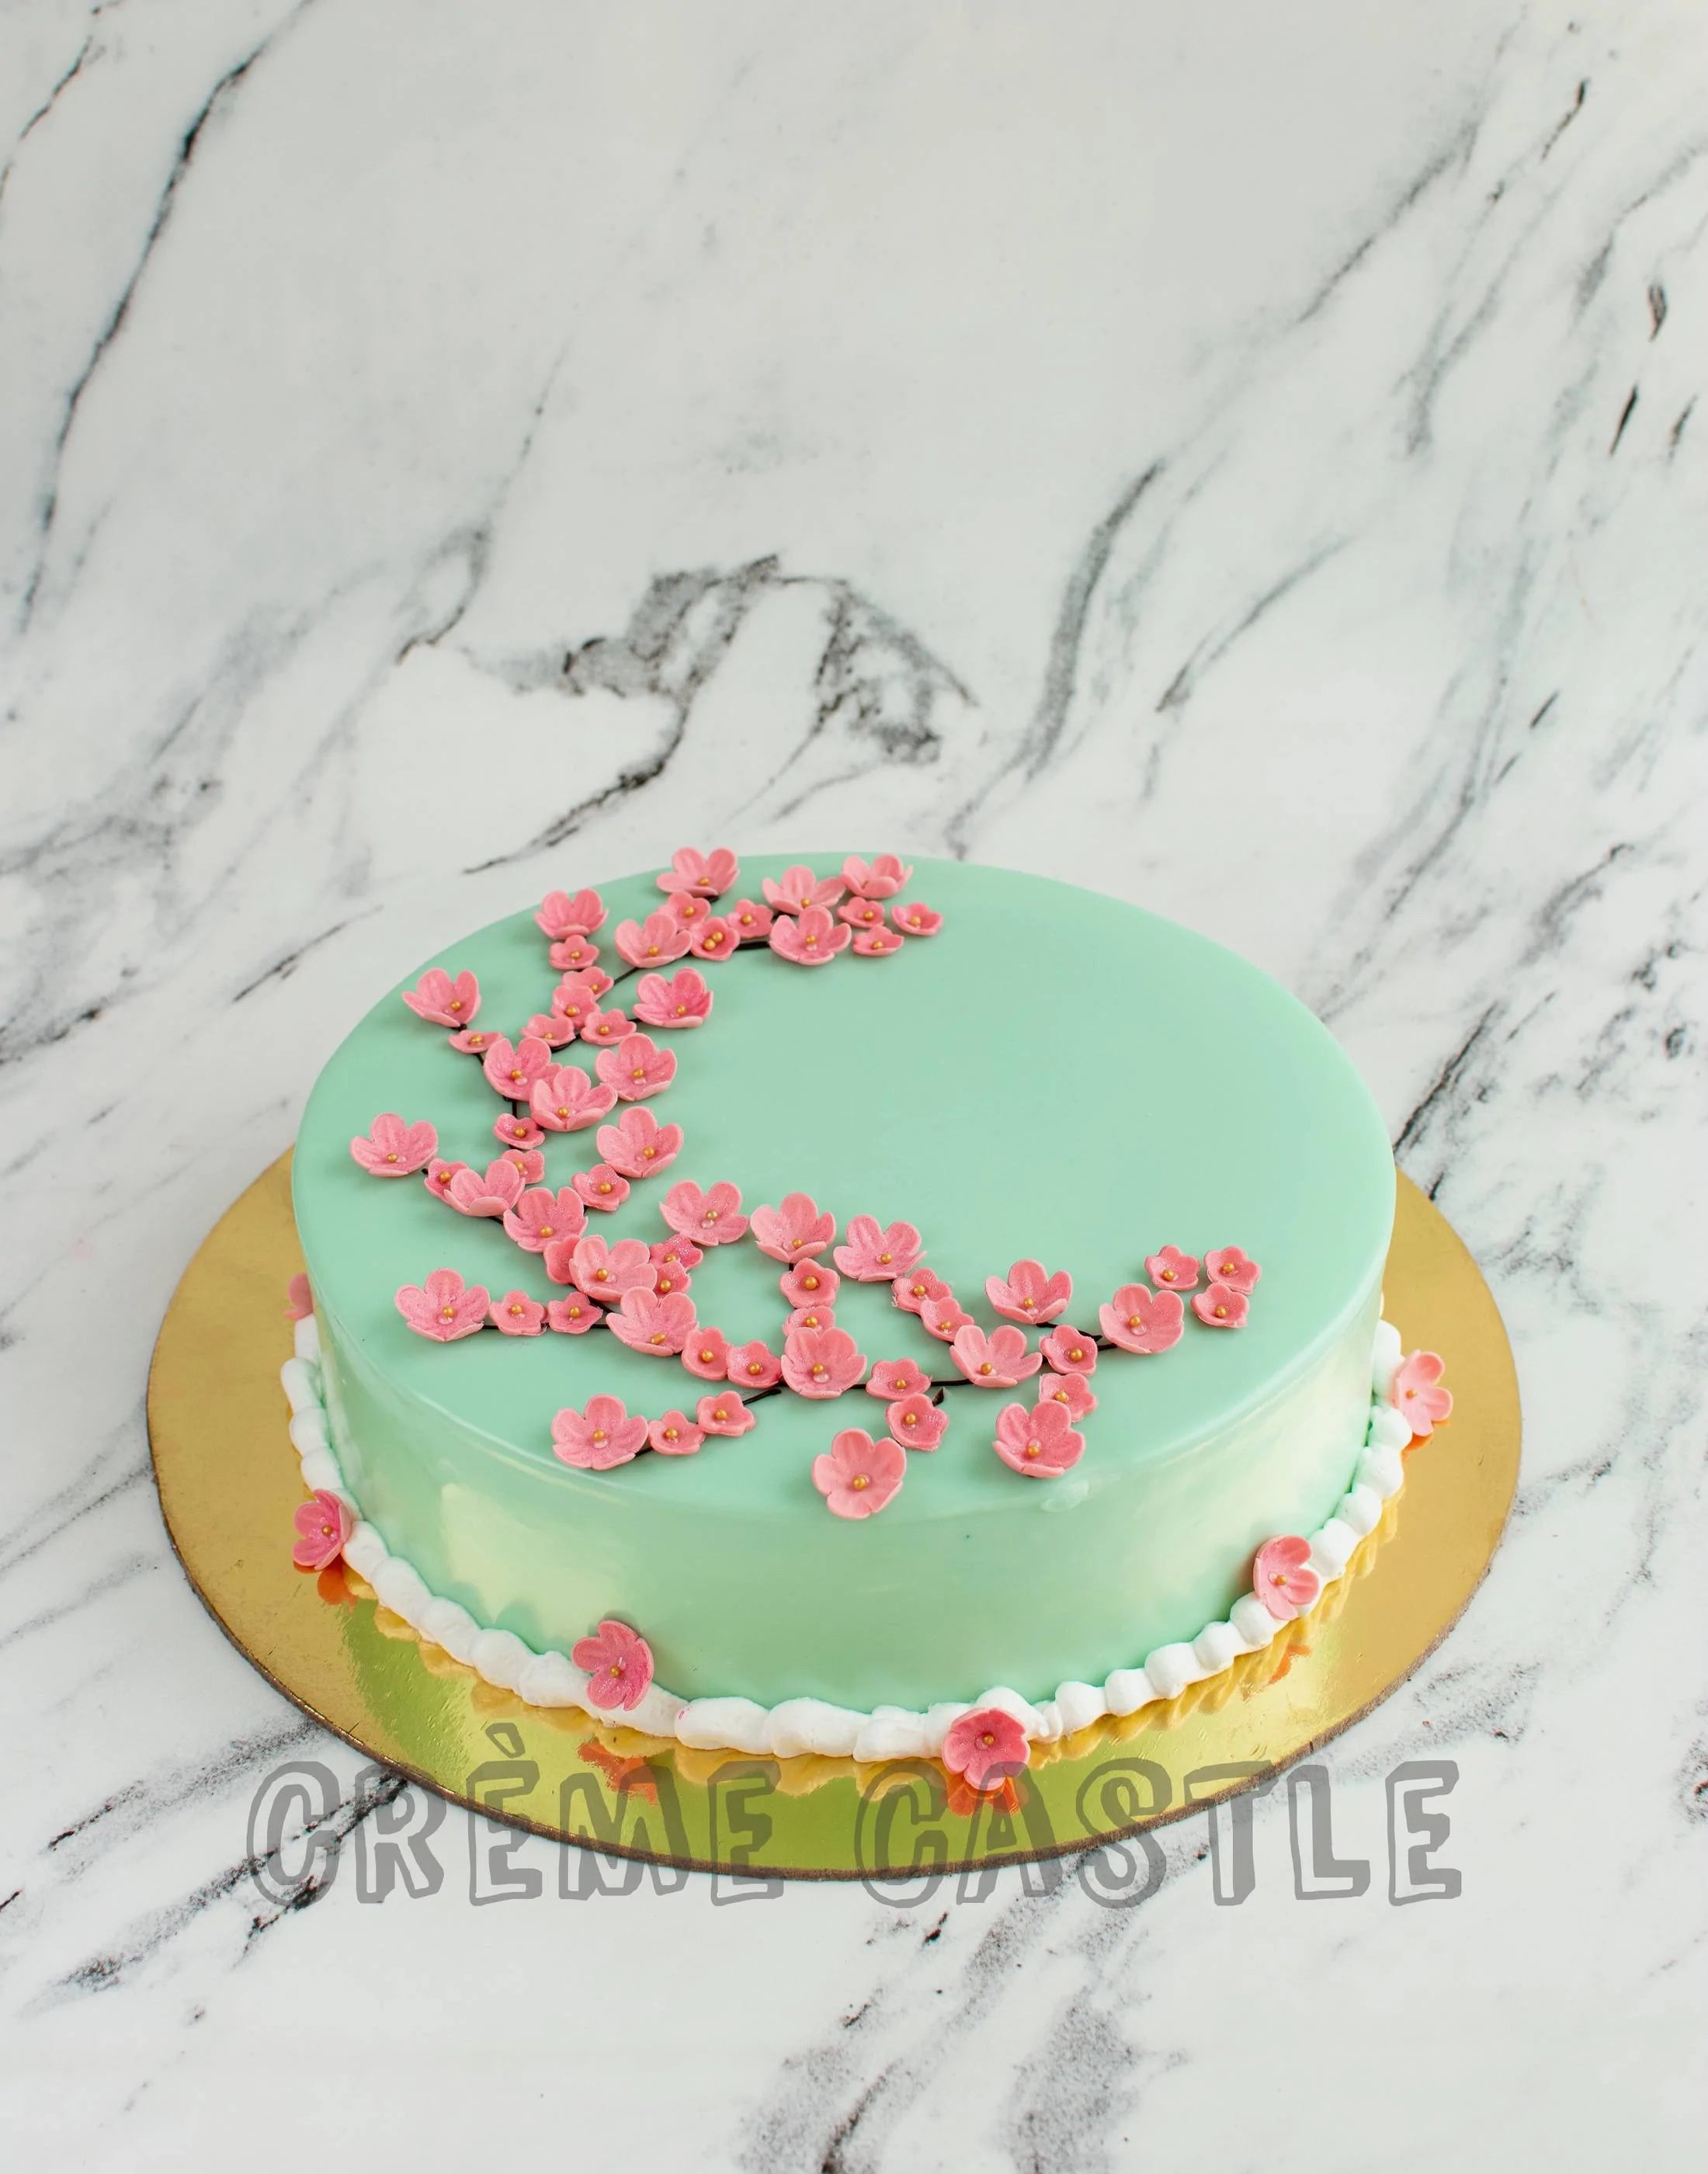 Flower Cake | Cake, Cake decorating designs, Cake decorating